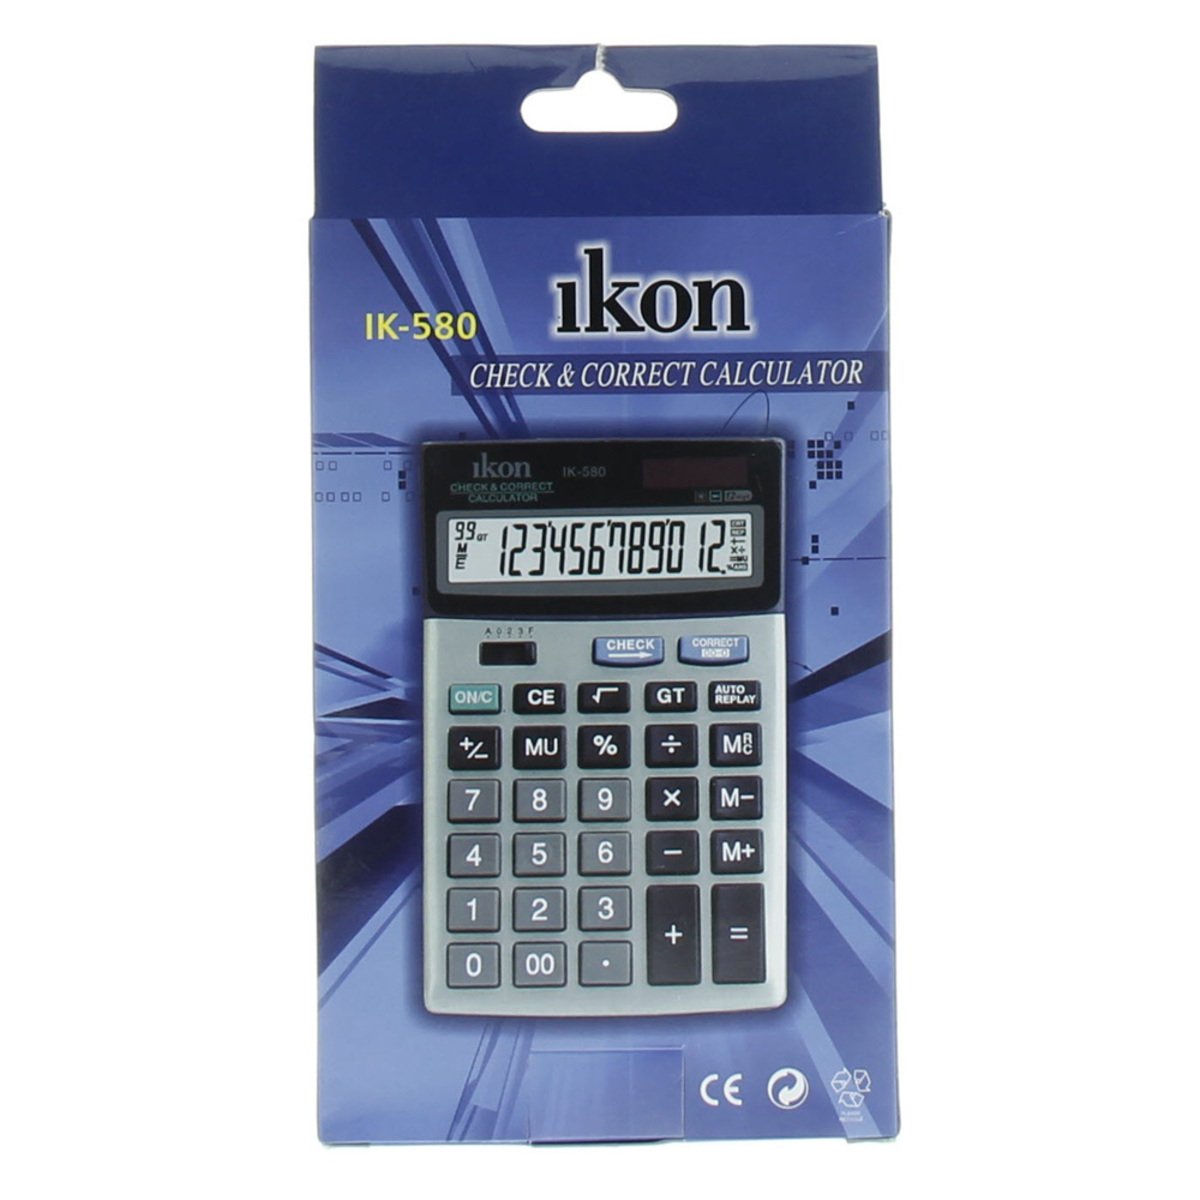 Ikon Check & Correct Calculator IK-580